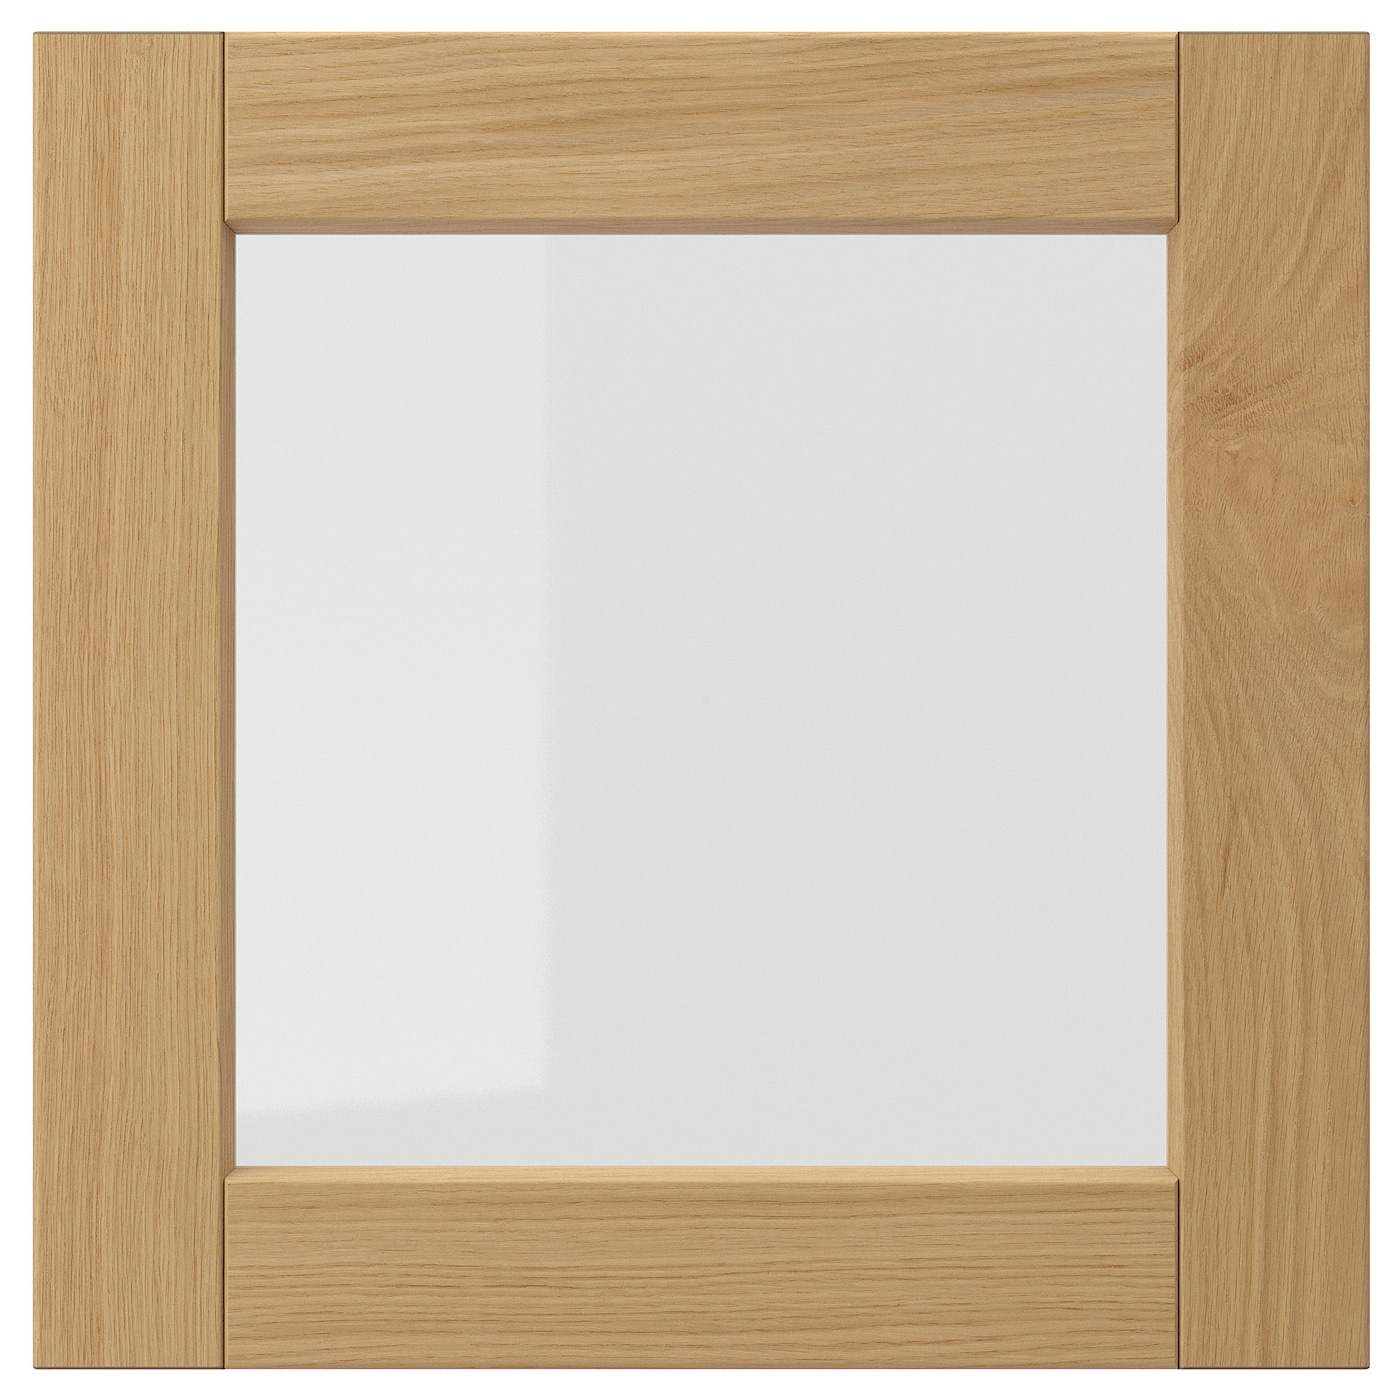 Стеклянная дверца - FORSBACKA IKEA/ ФОРСБАКА ИКЕА,  40х40 см, под беленый дуб